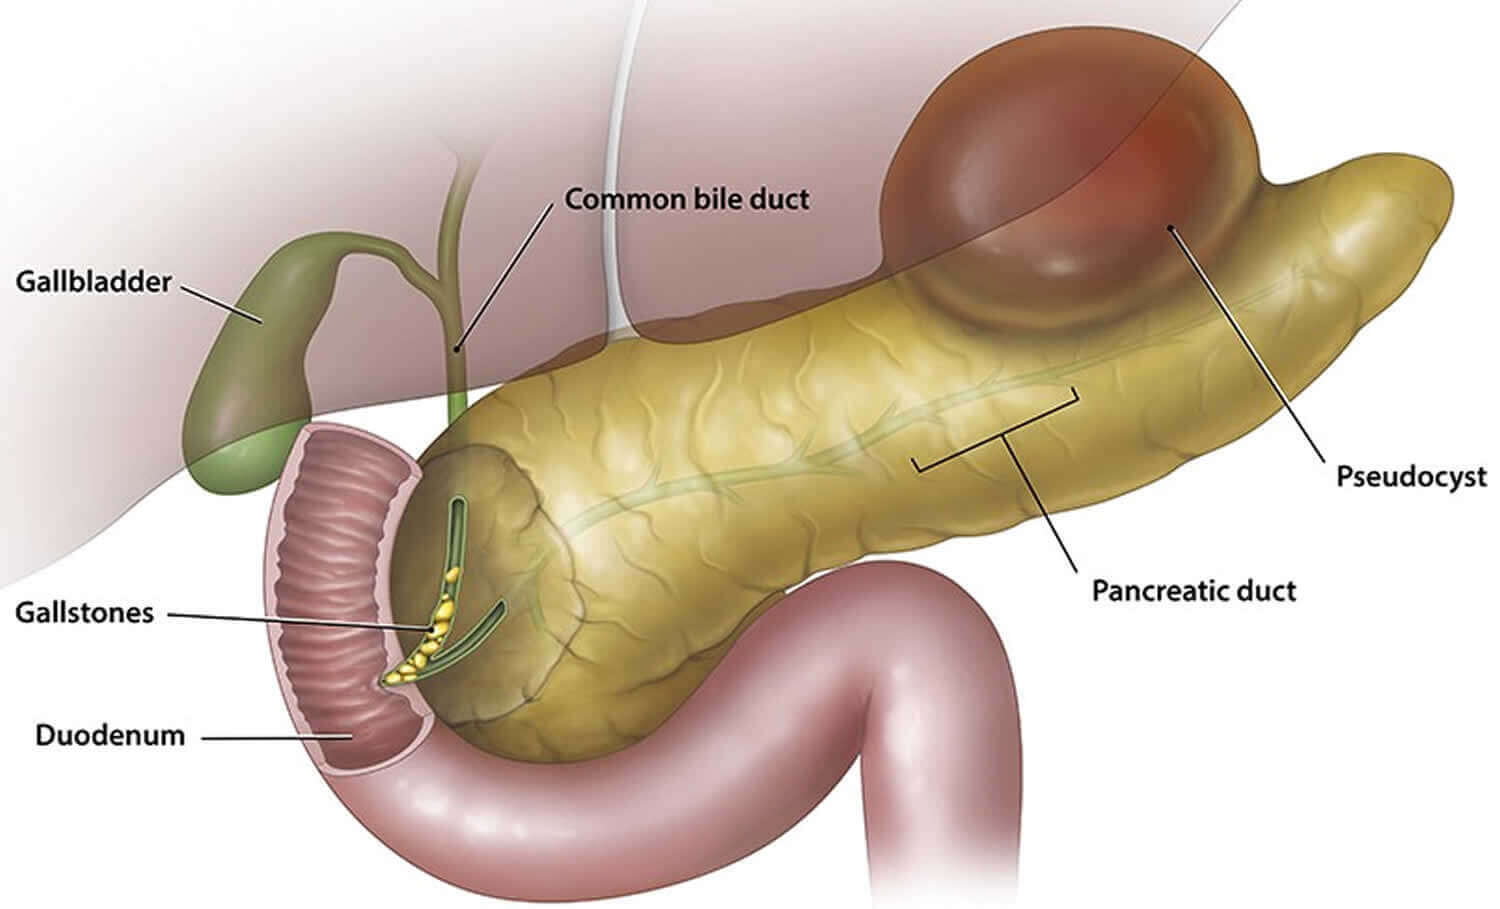 Pseudocyst of pancreas